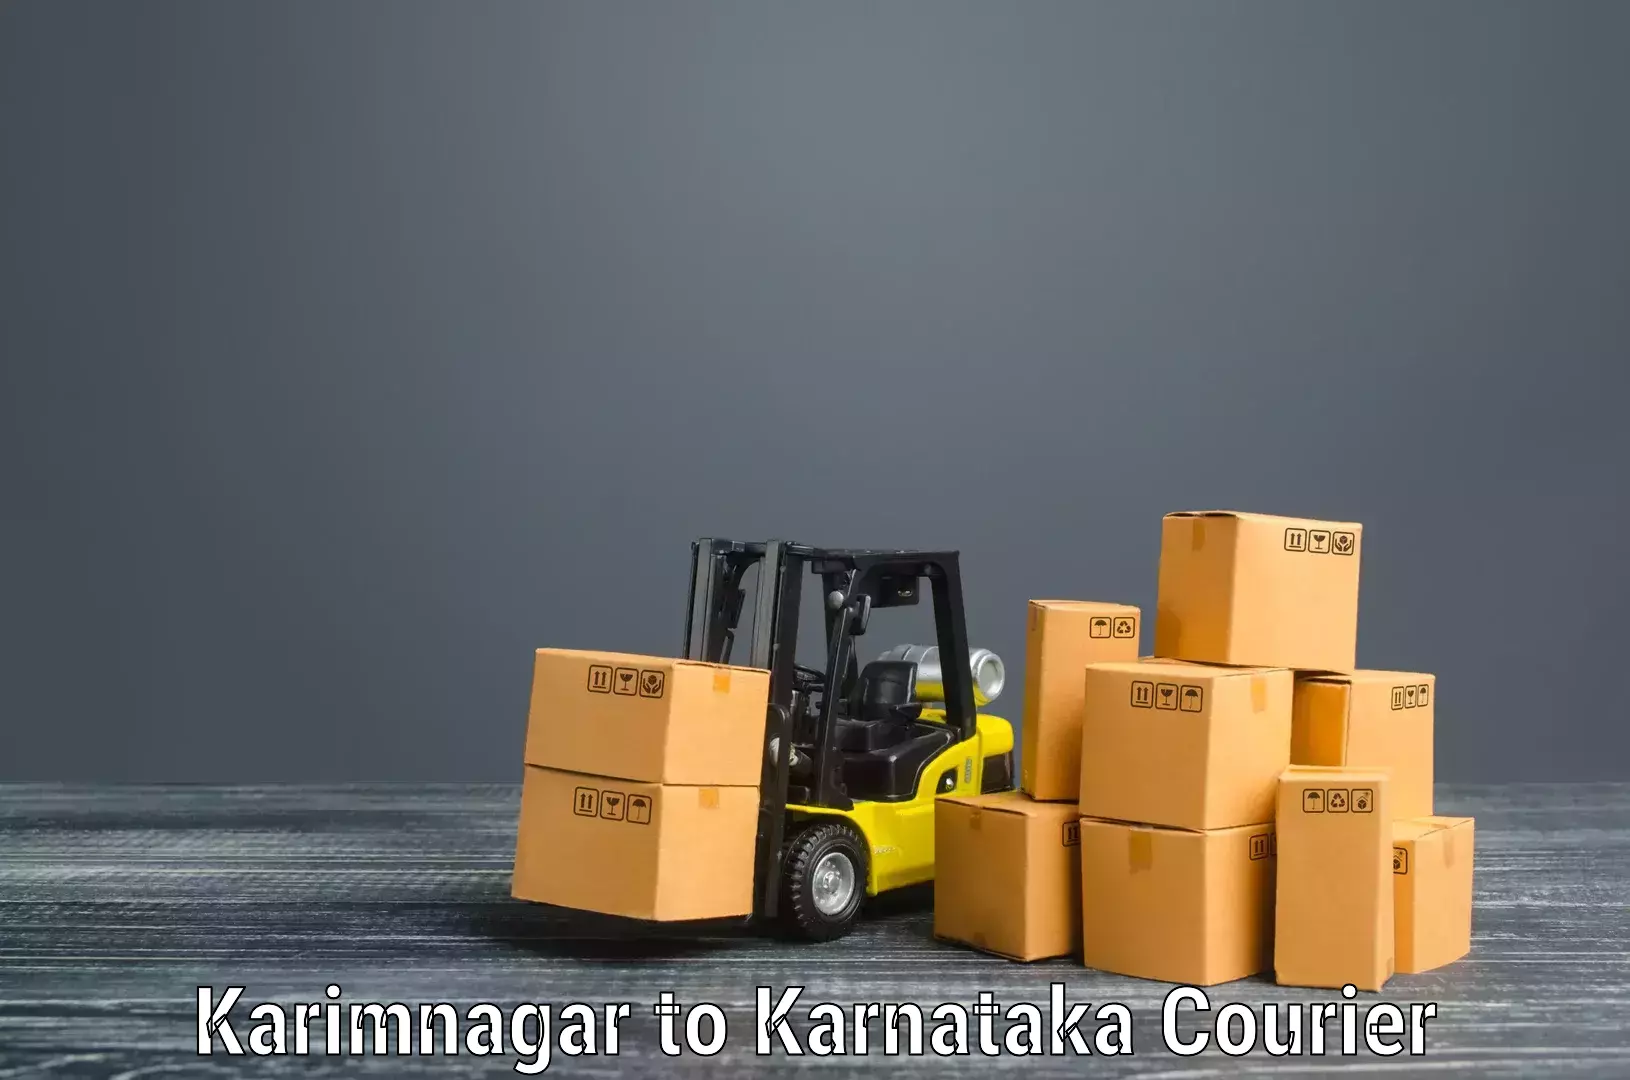 Furniture moving specialists Karimnagar to Mangalore